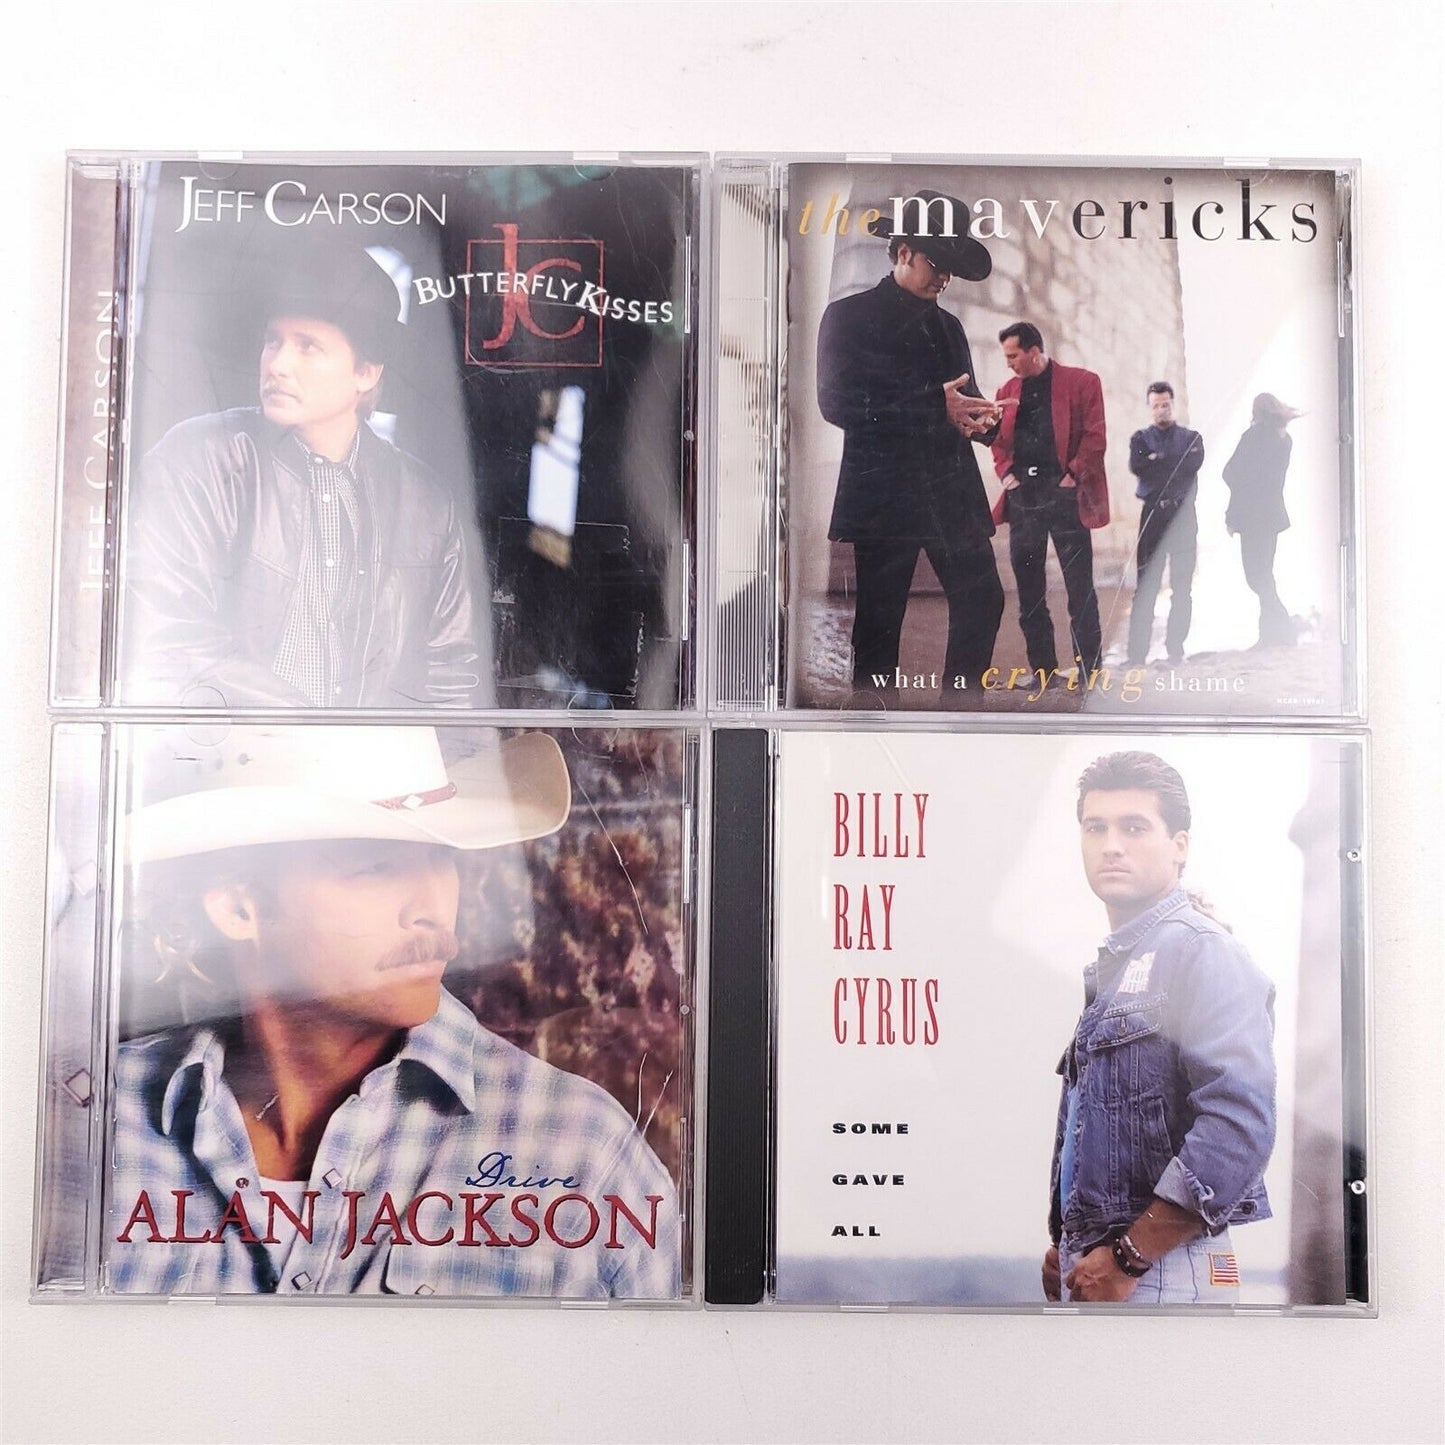 8 Country Artist CD's - Alan Jackson, George Jones, Kenny Rogers, Travis Tritt